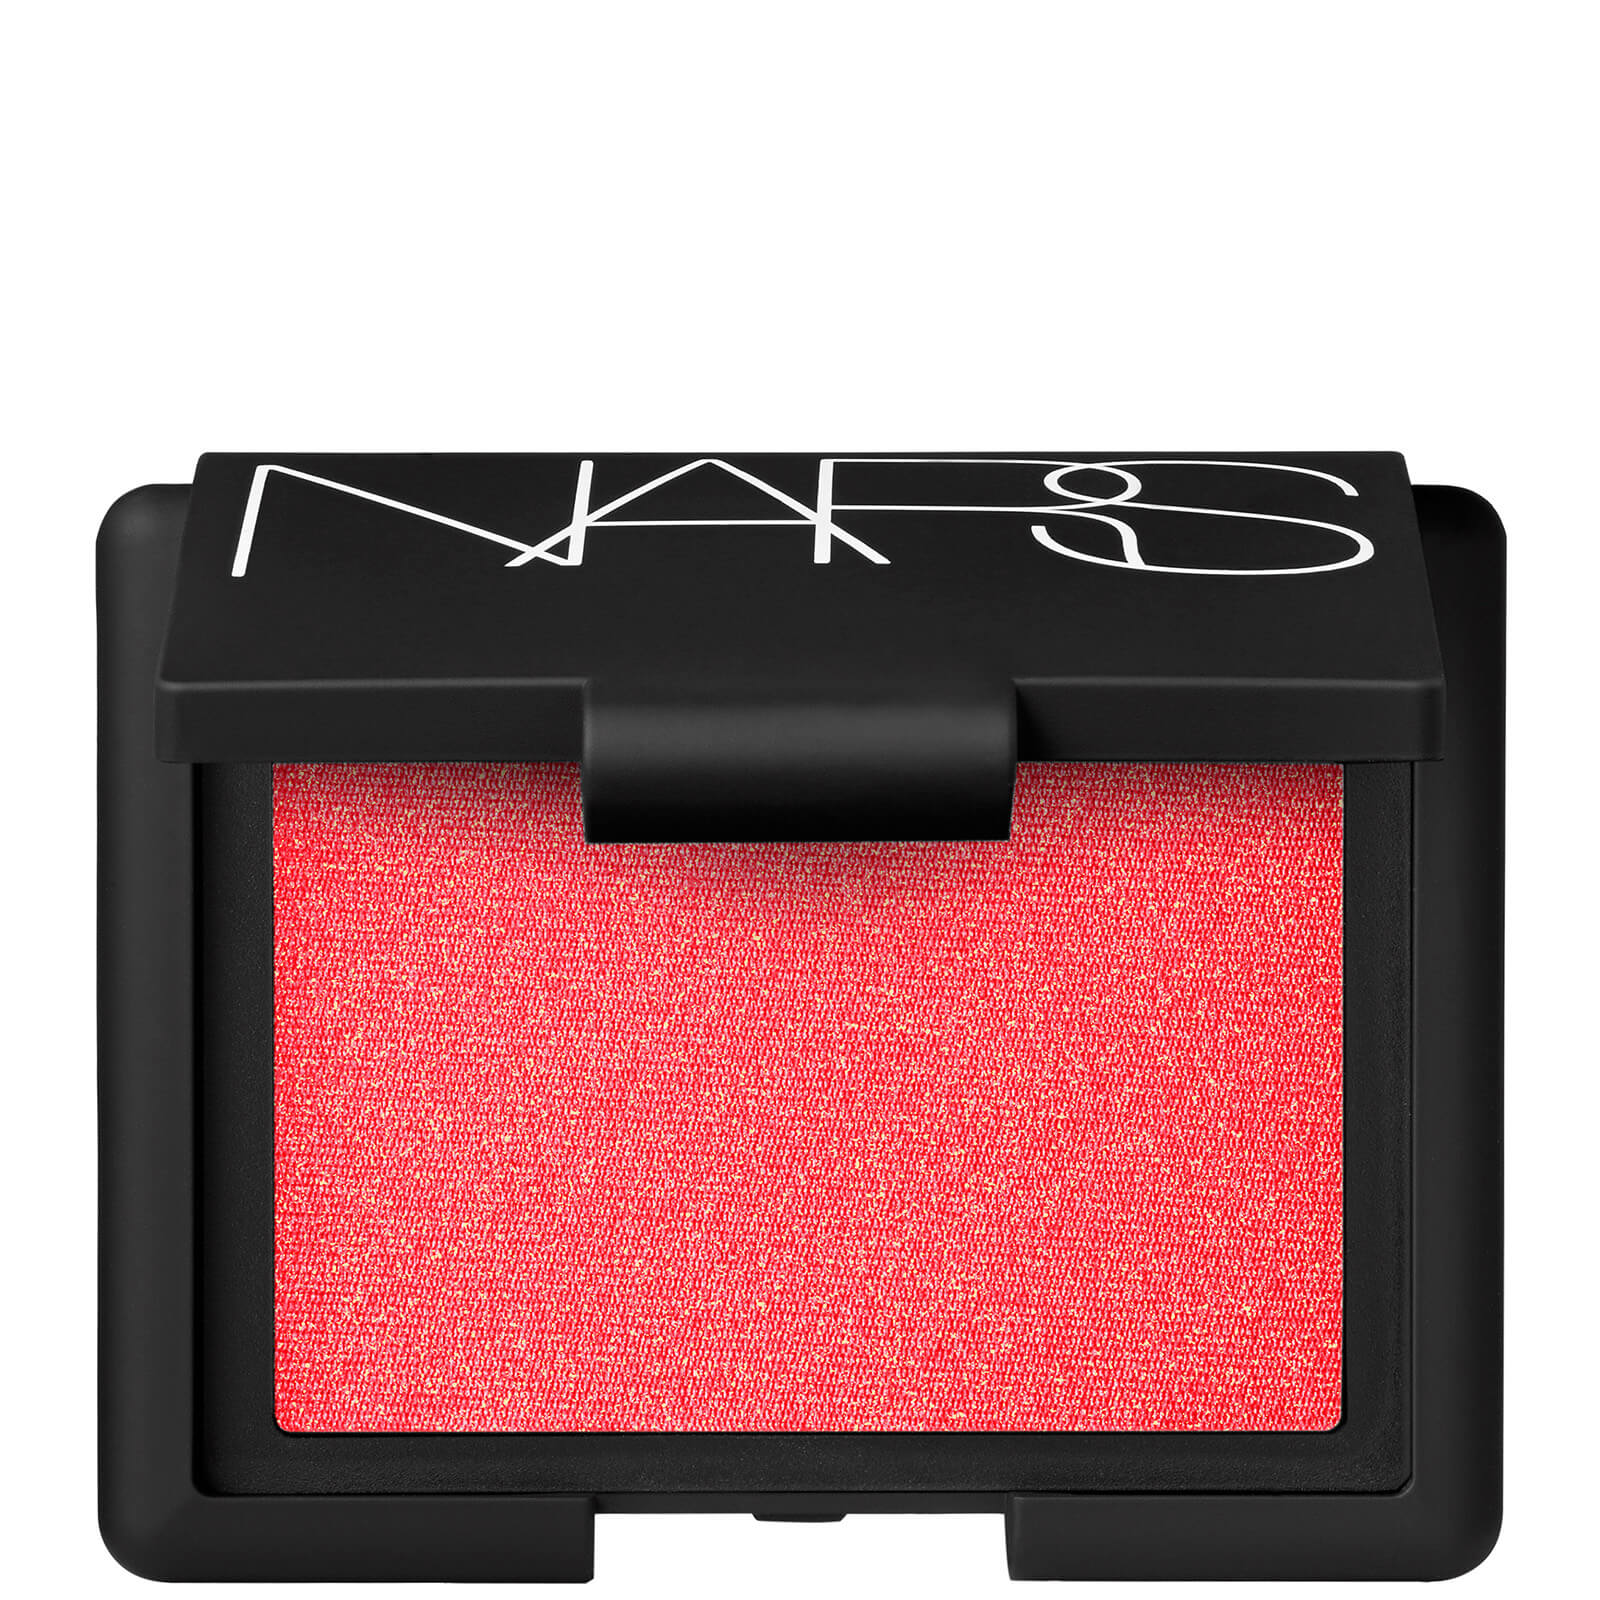 Photos - Face Powder / Blush NARS Cosmetics Blush 4.8g  - ORGASM X (Various Shades)